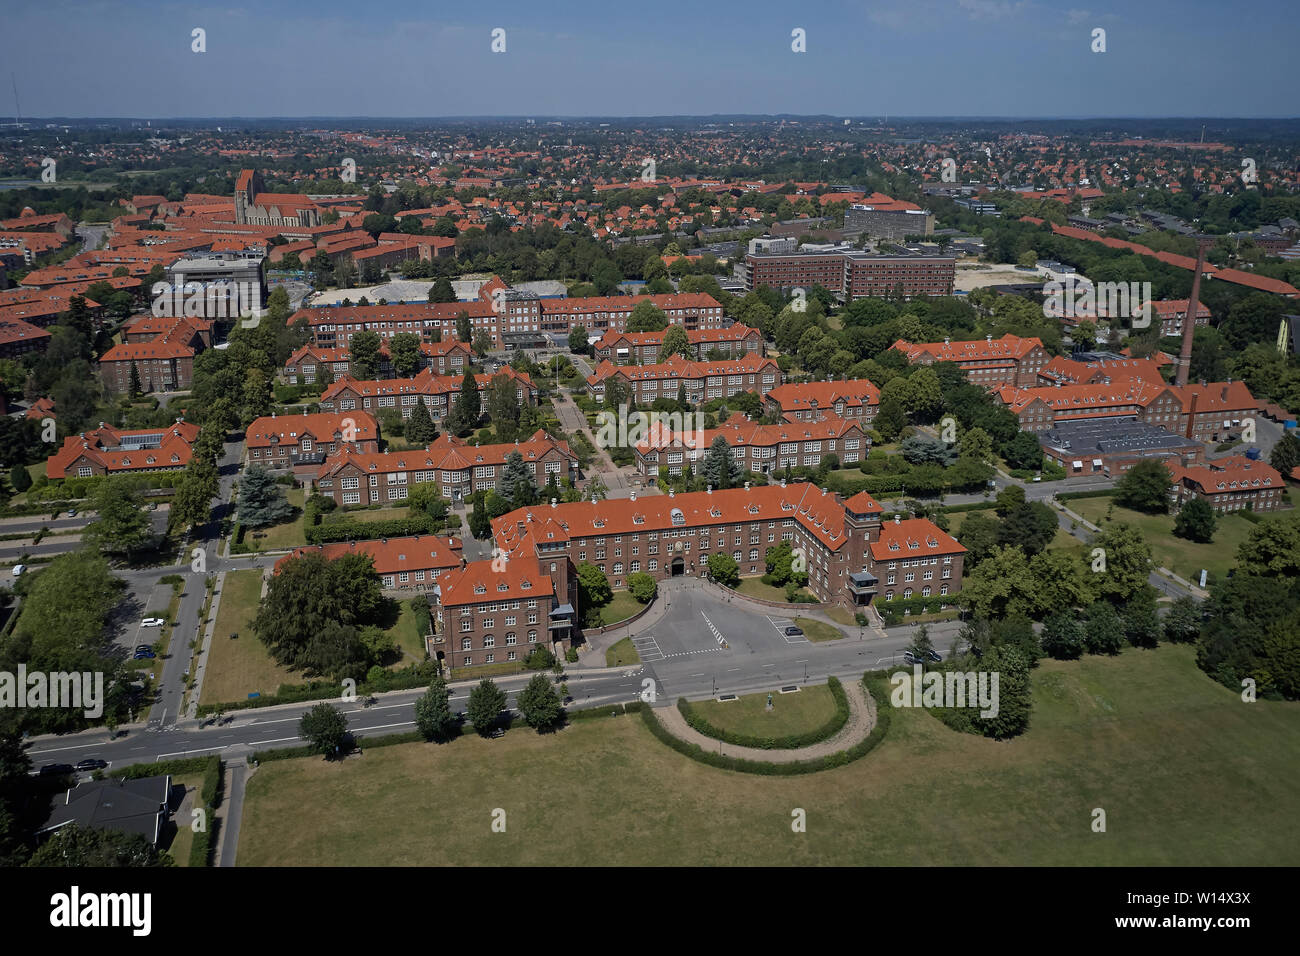 Aerial view of Bispebjerg Hospital located in Copenhagen, Denmark Stock Photo